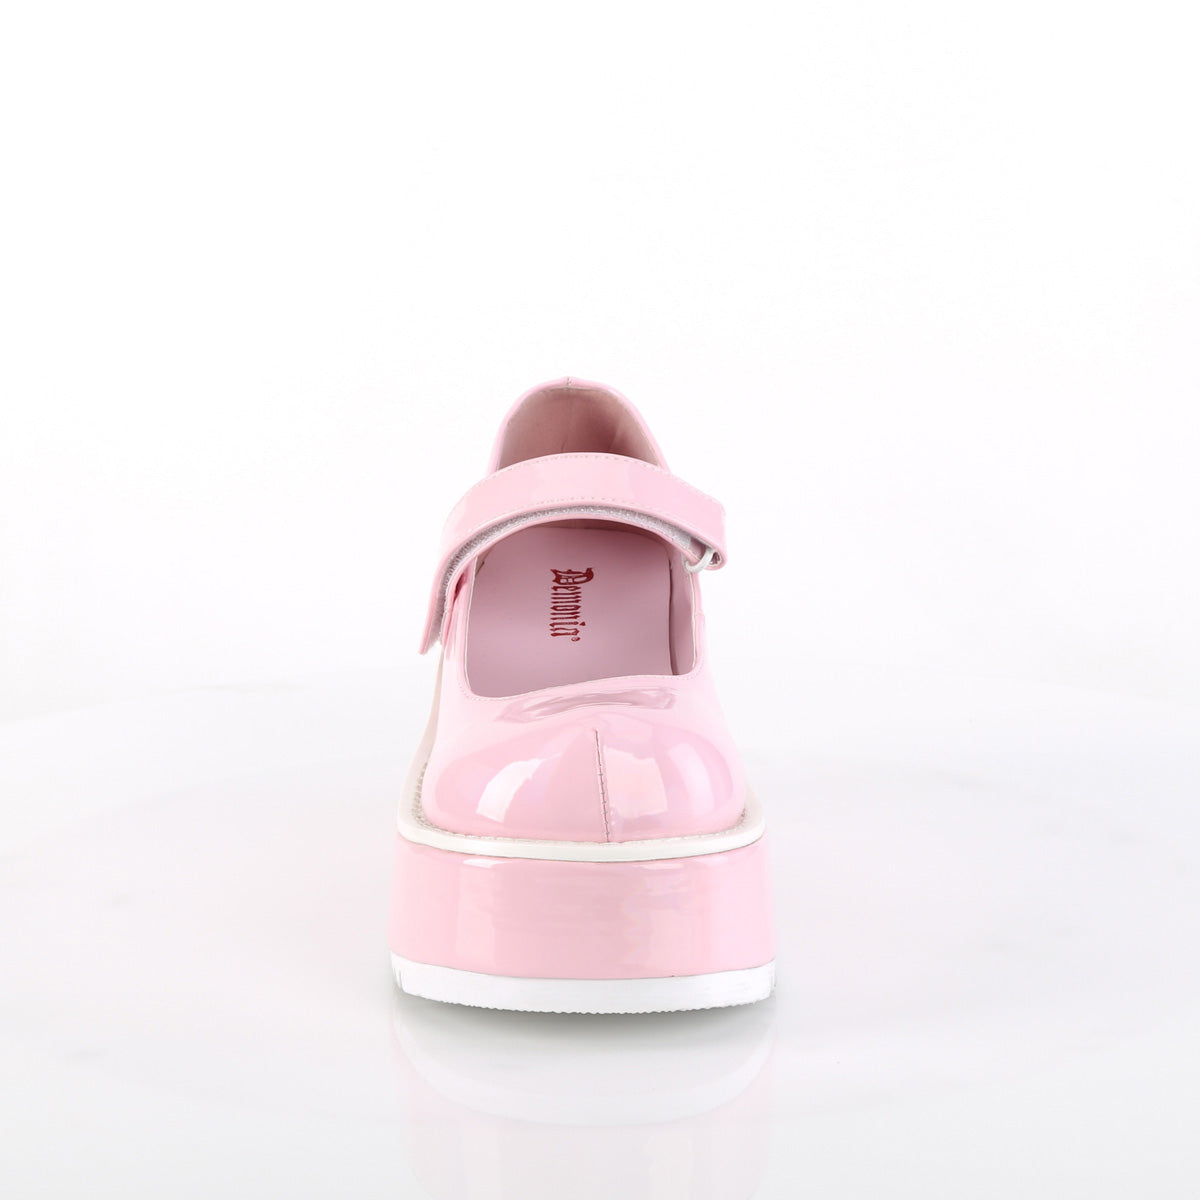 DOLLIE-01 Demonia B Pink Holo Patent Women's Heels & Platform Shoes [Demonia Cult Alternative Footwear]